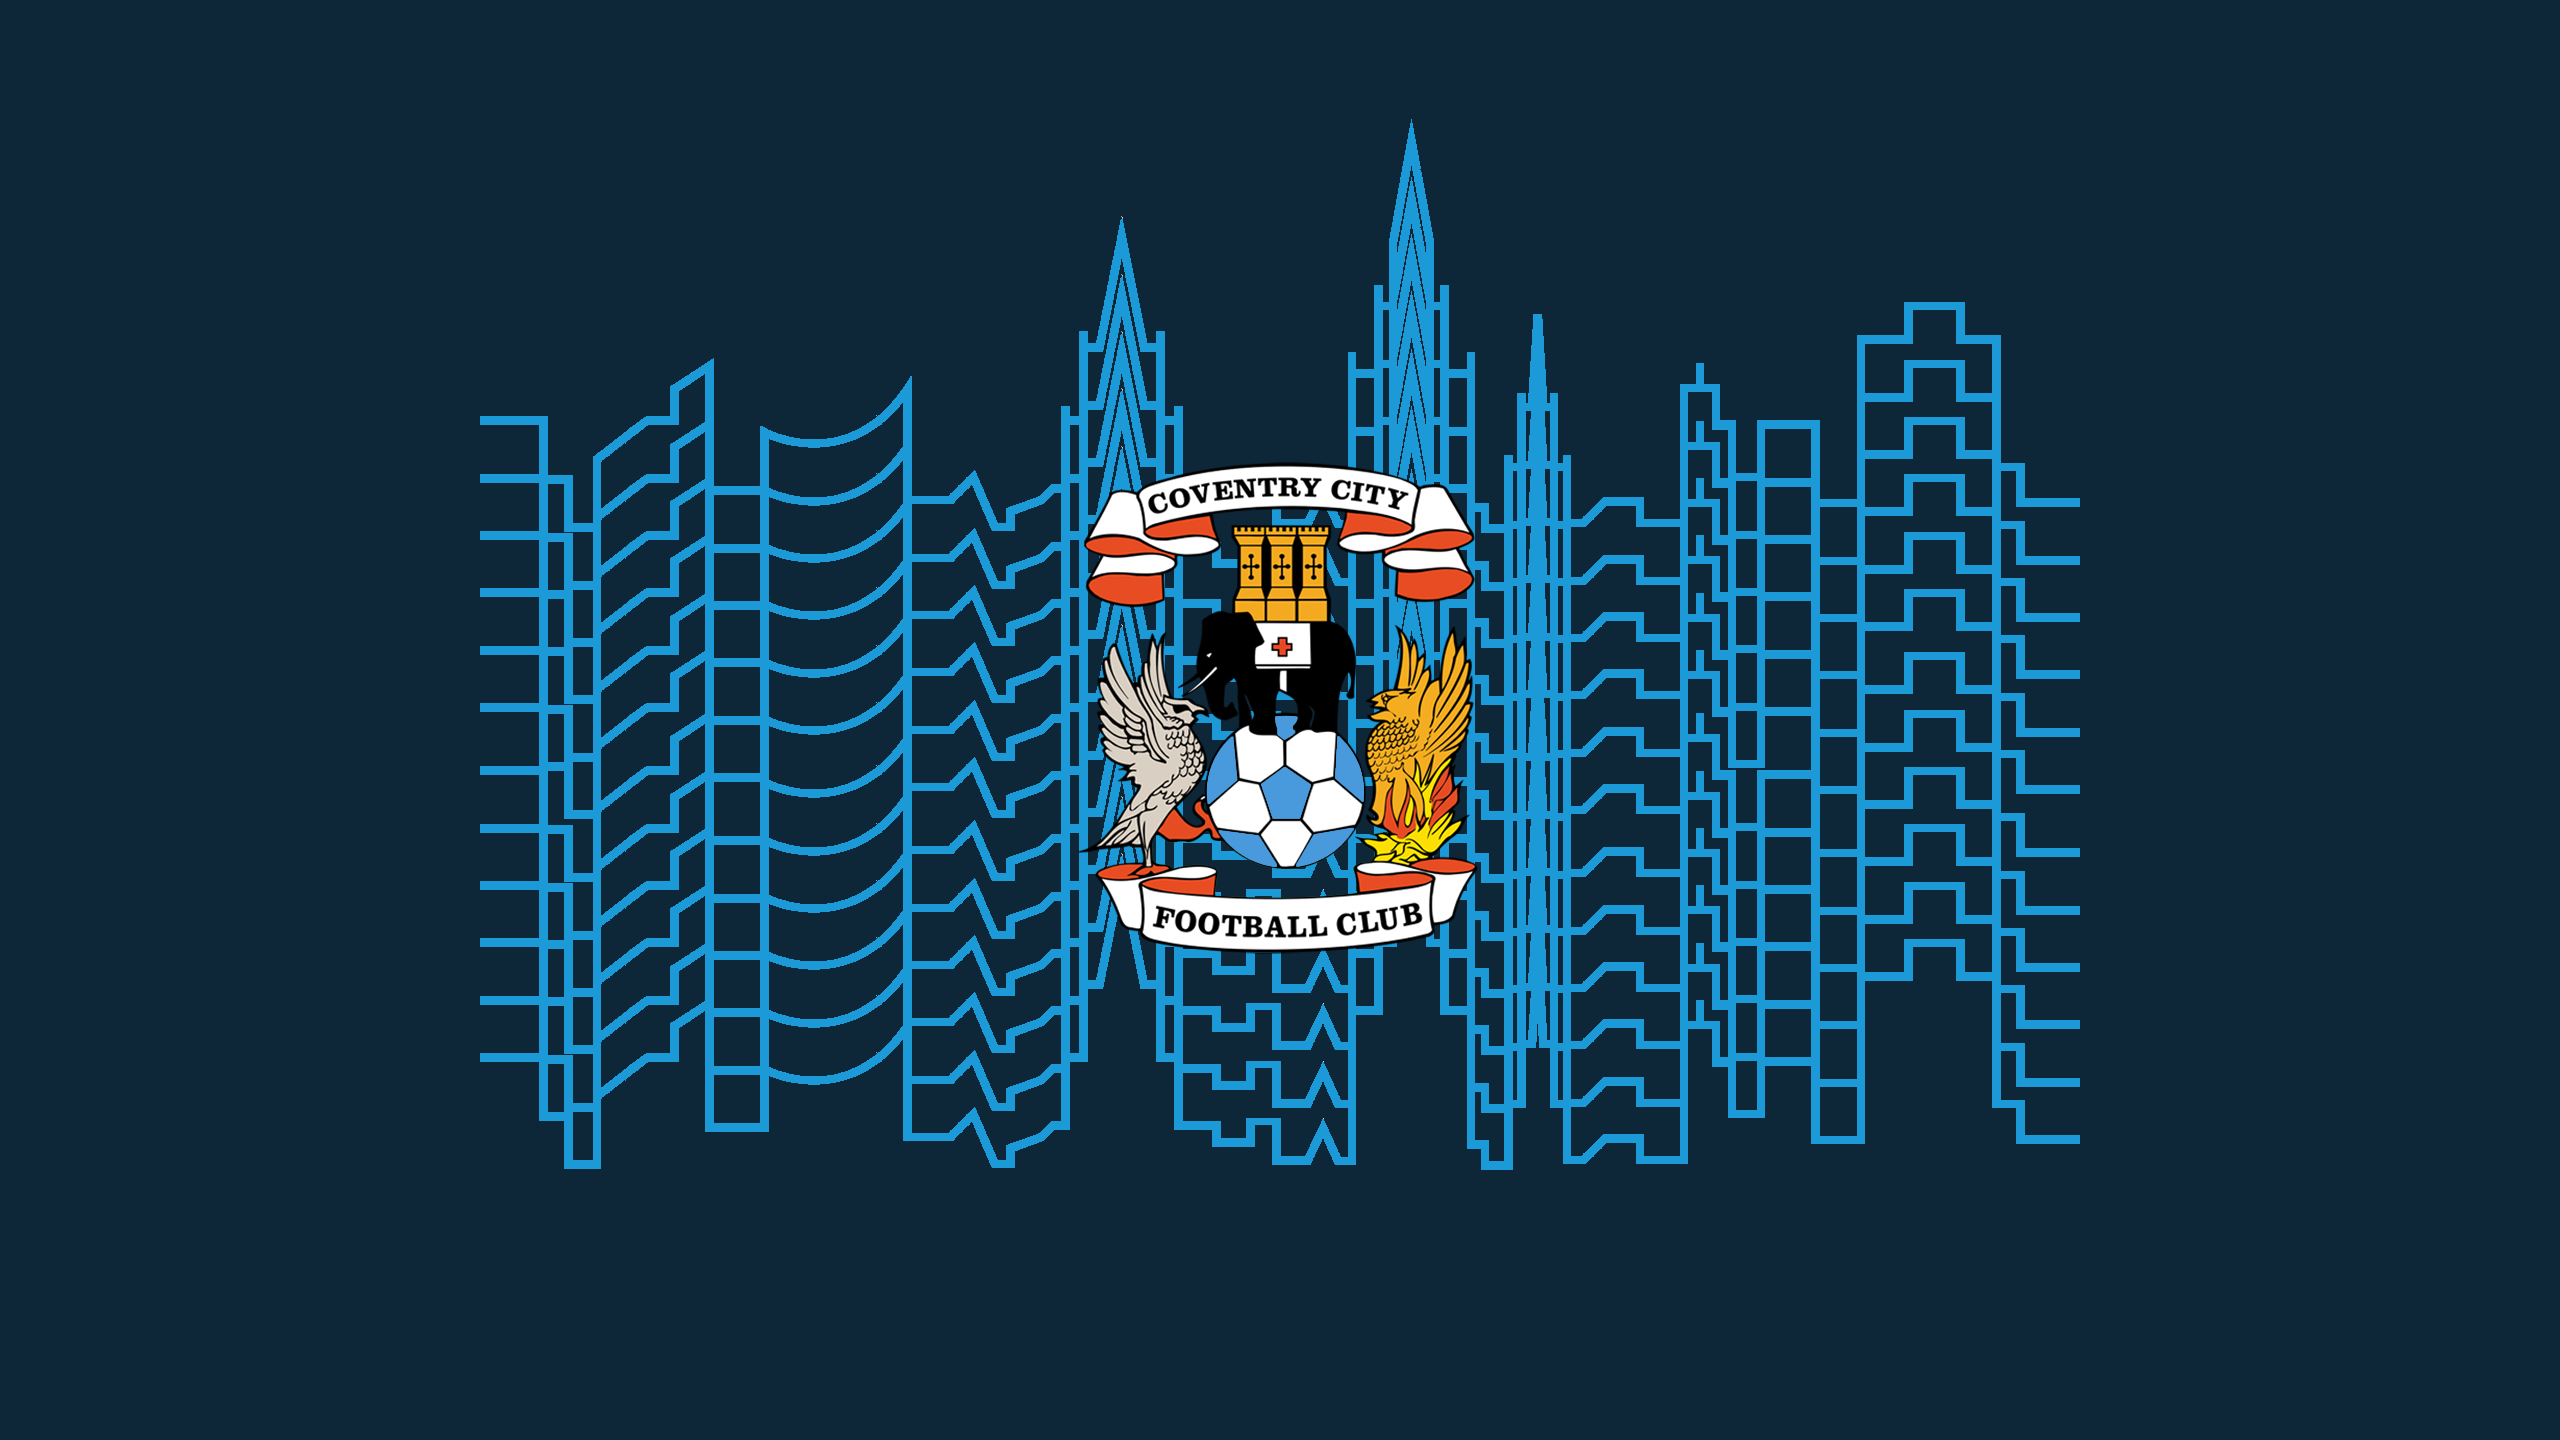 Coventry City, Logopedia